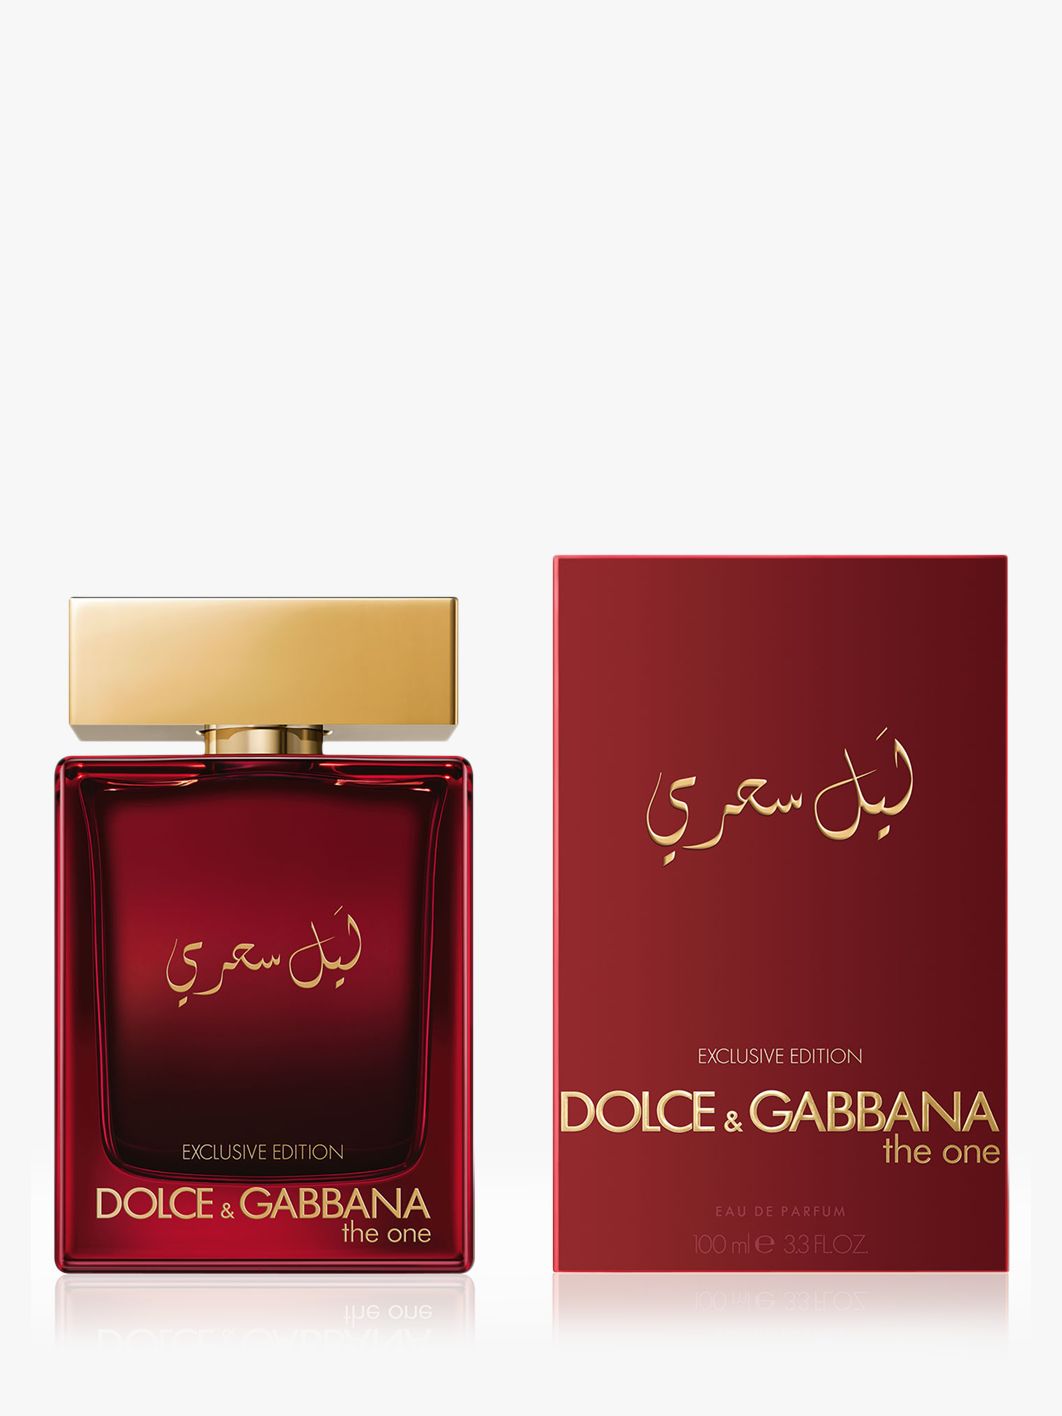 dolce gabbana exclusive edition